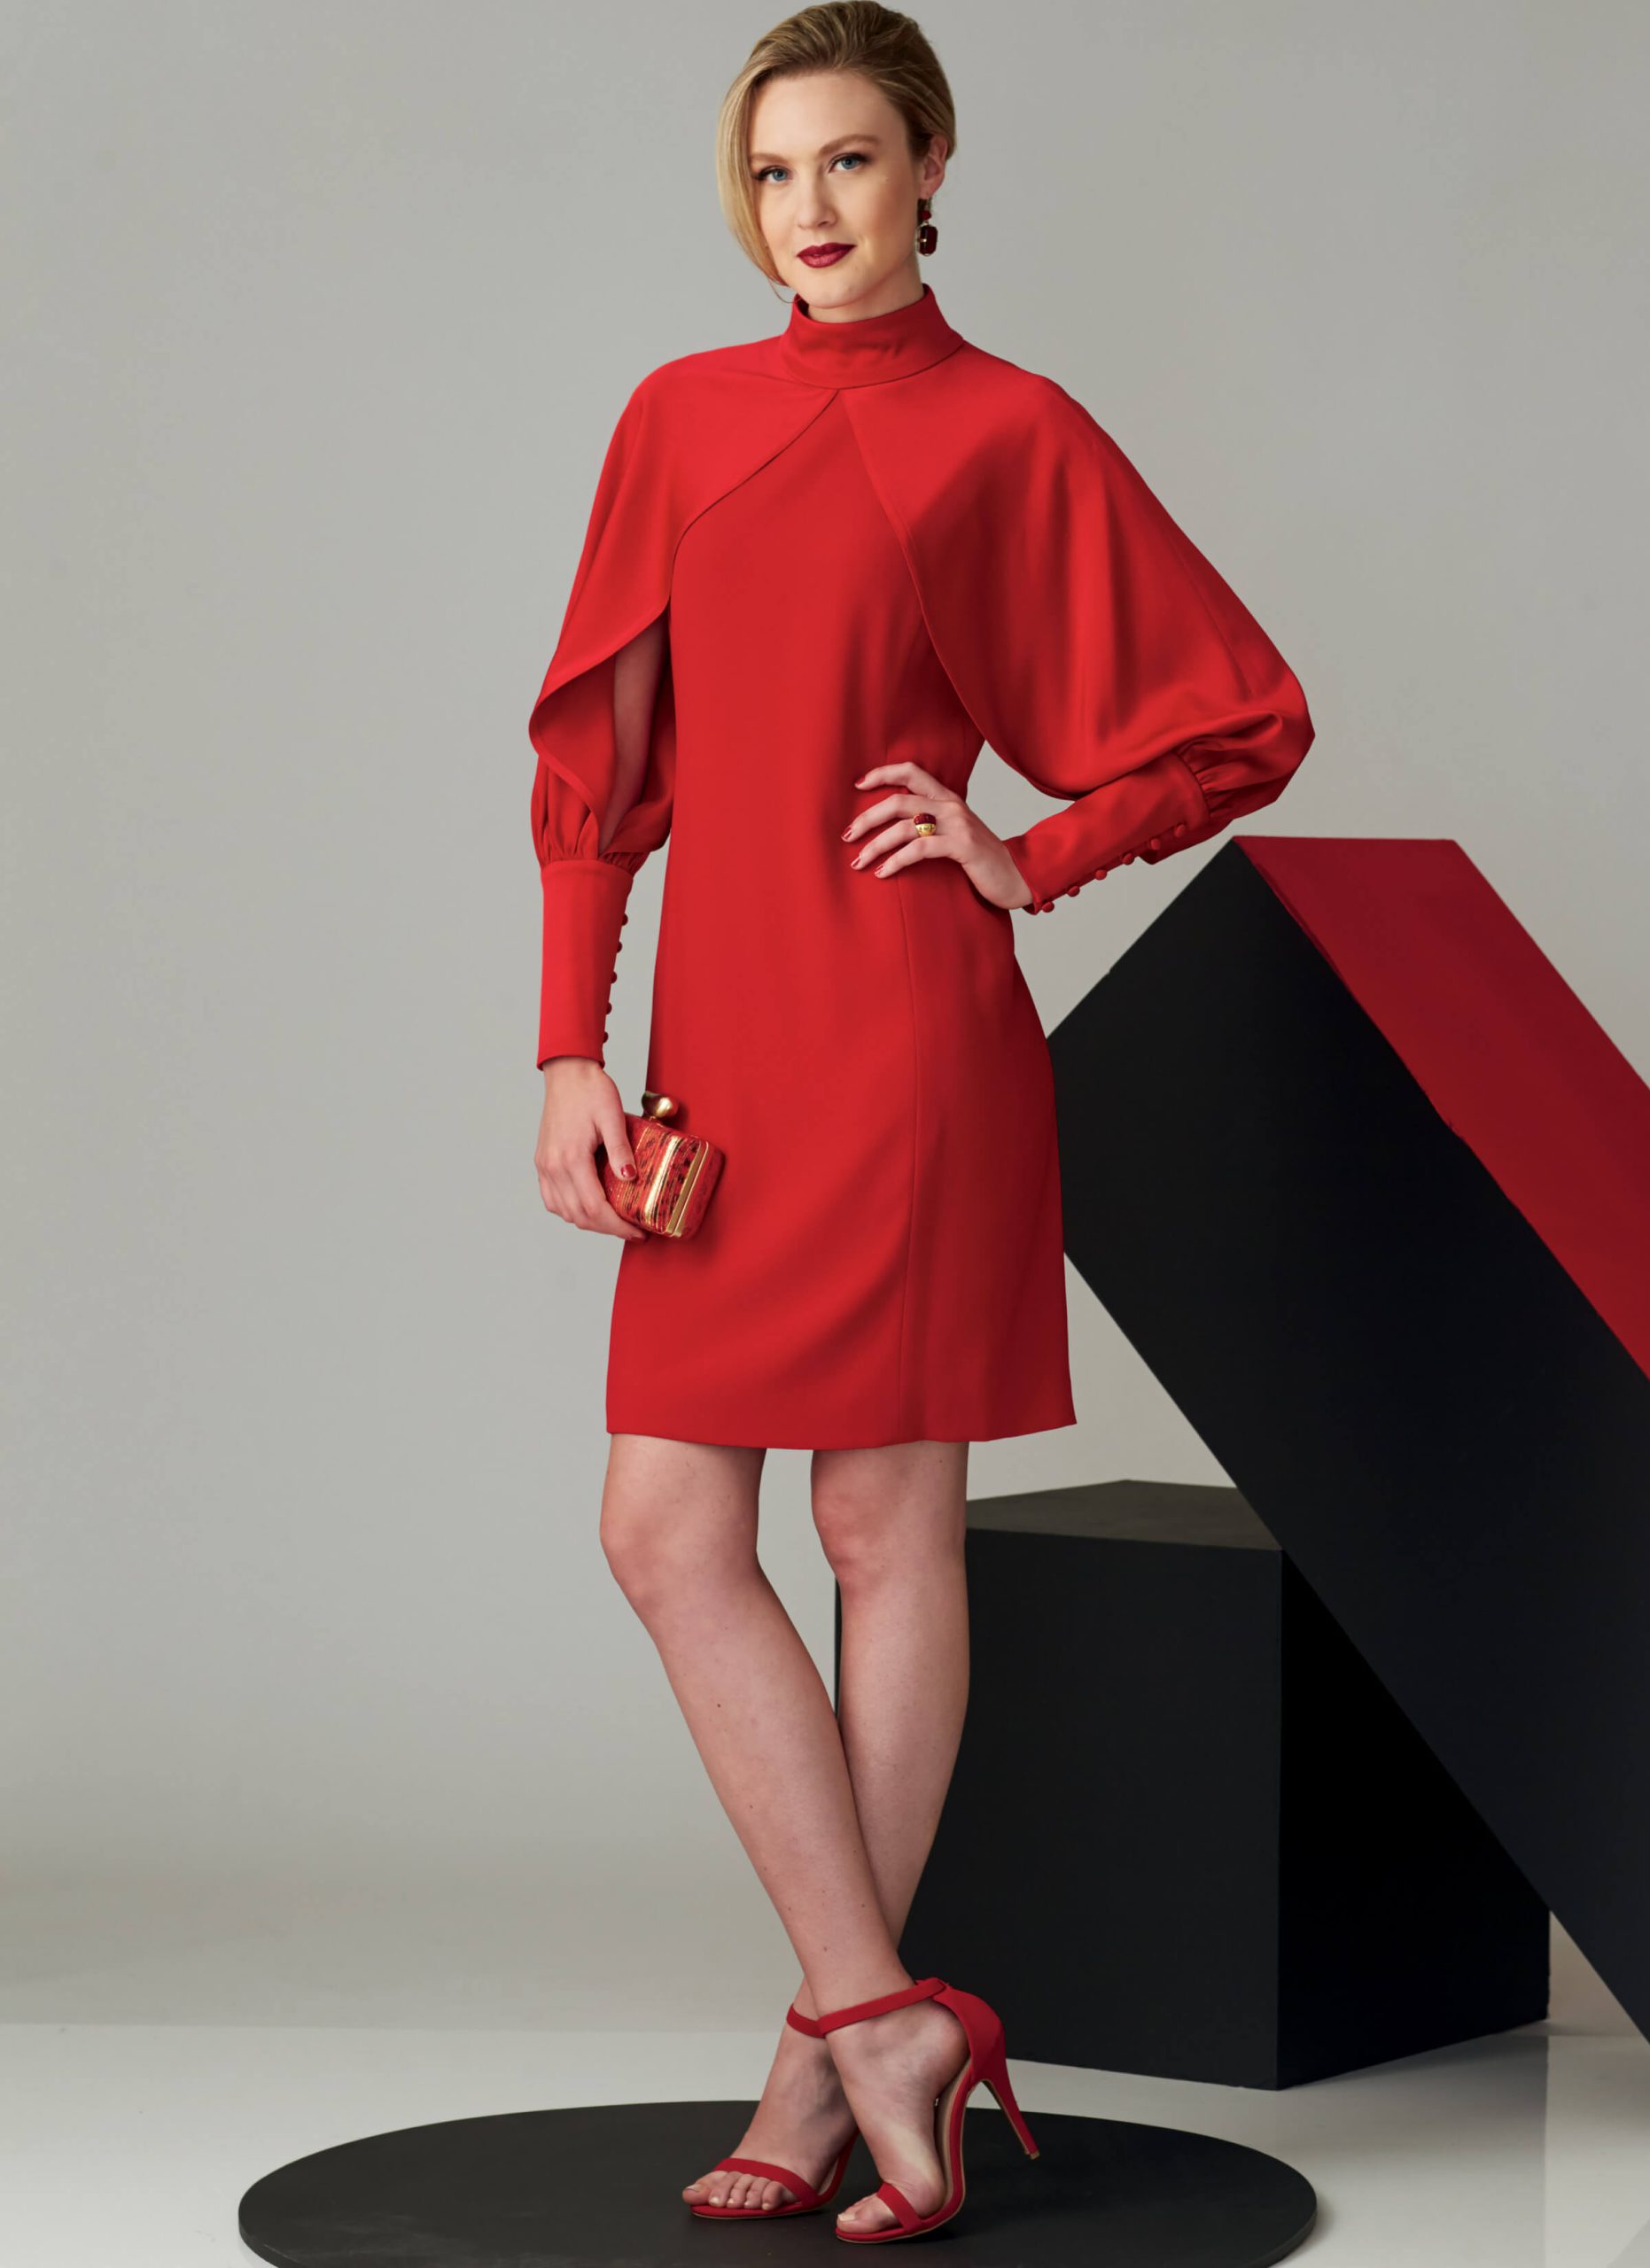 Vogue Patterns V1565 Misses' High Neck Dress with Full Sleeves